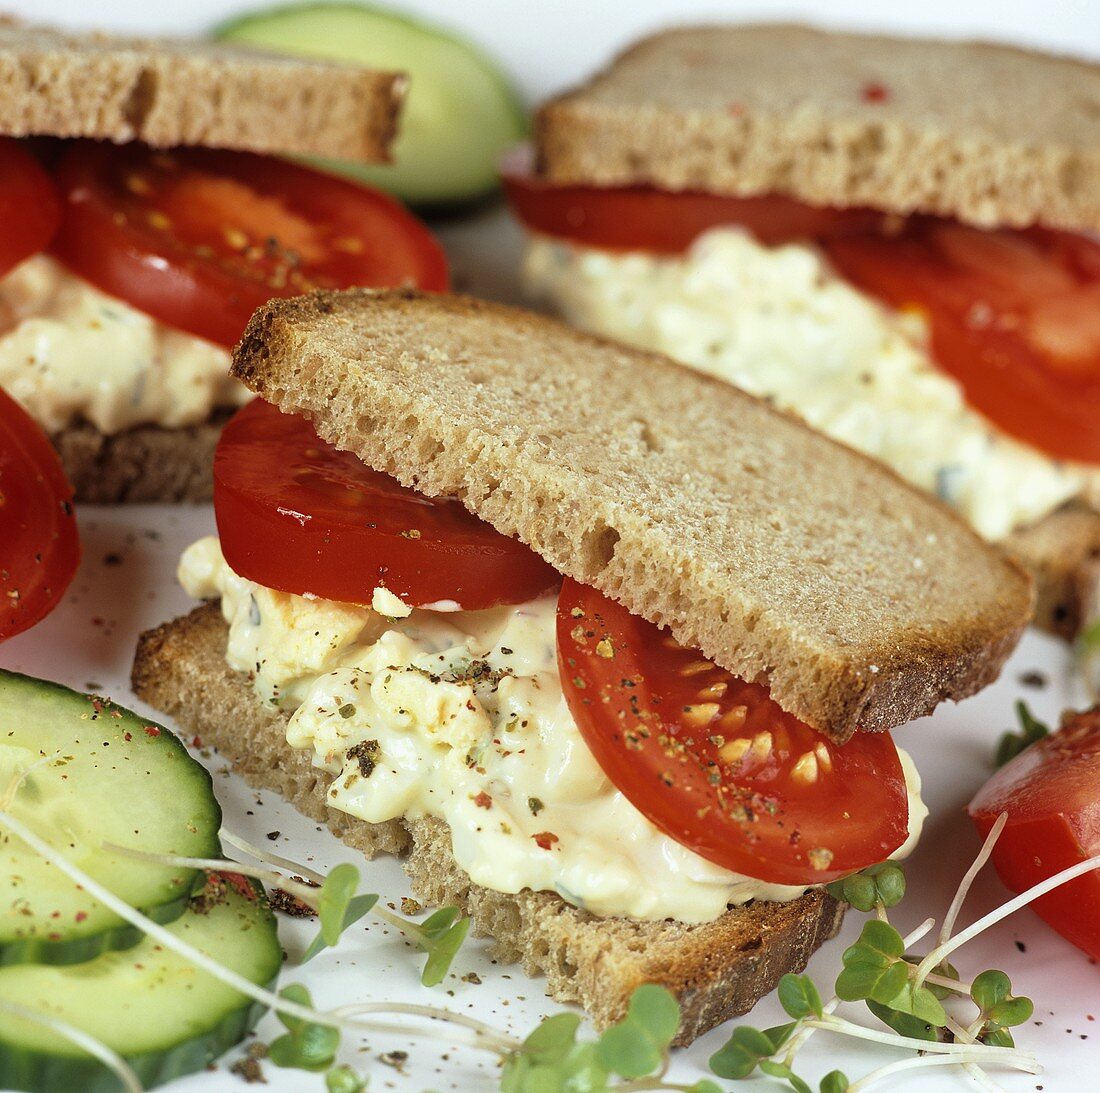 Egg mayonnaise and tomato sandwiches